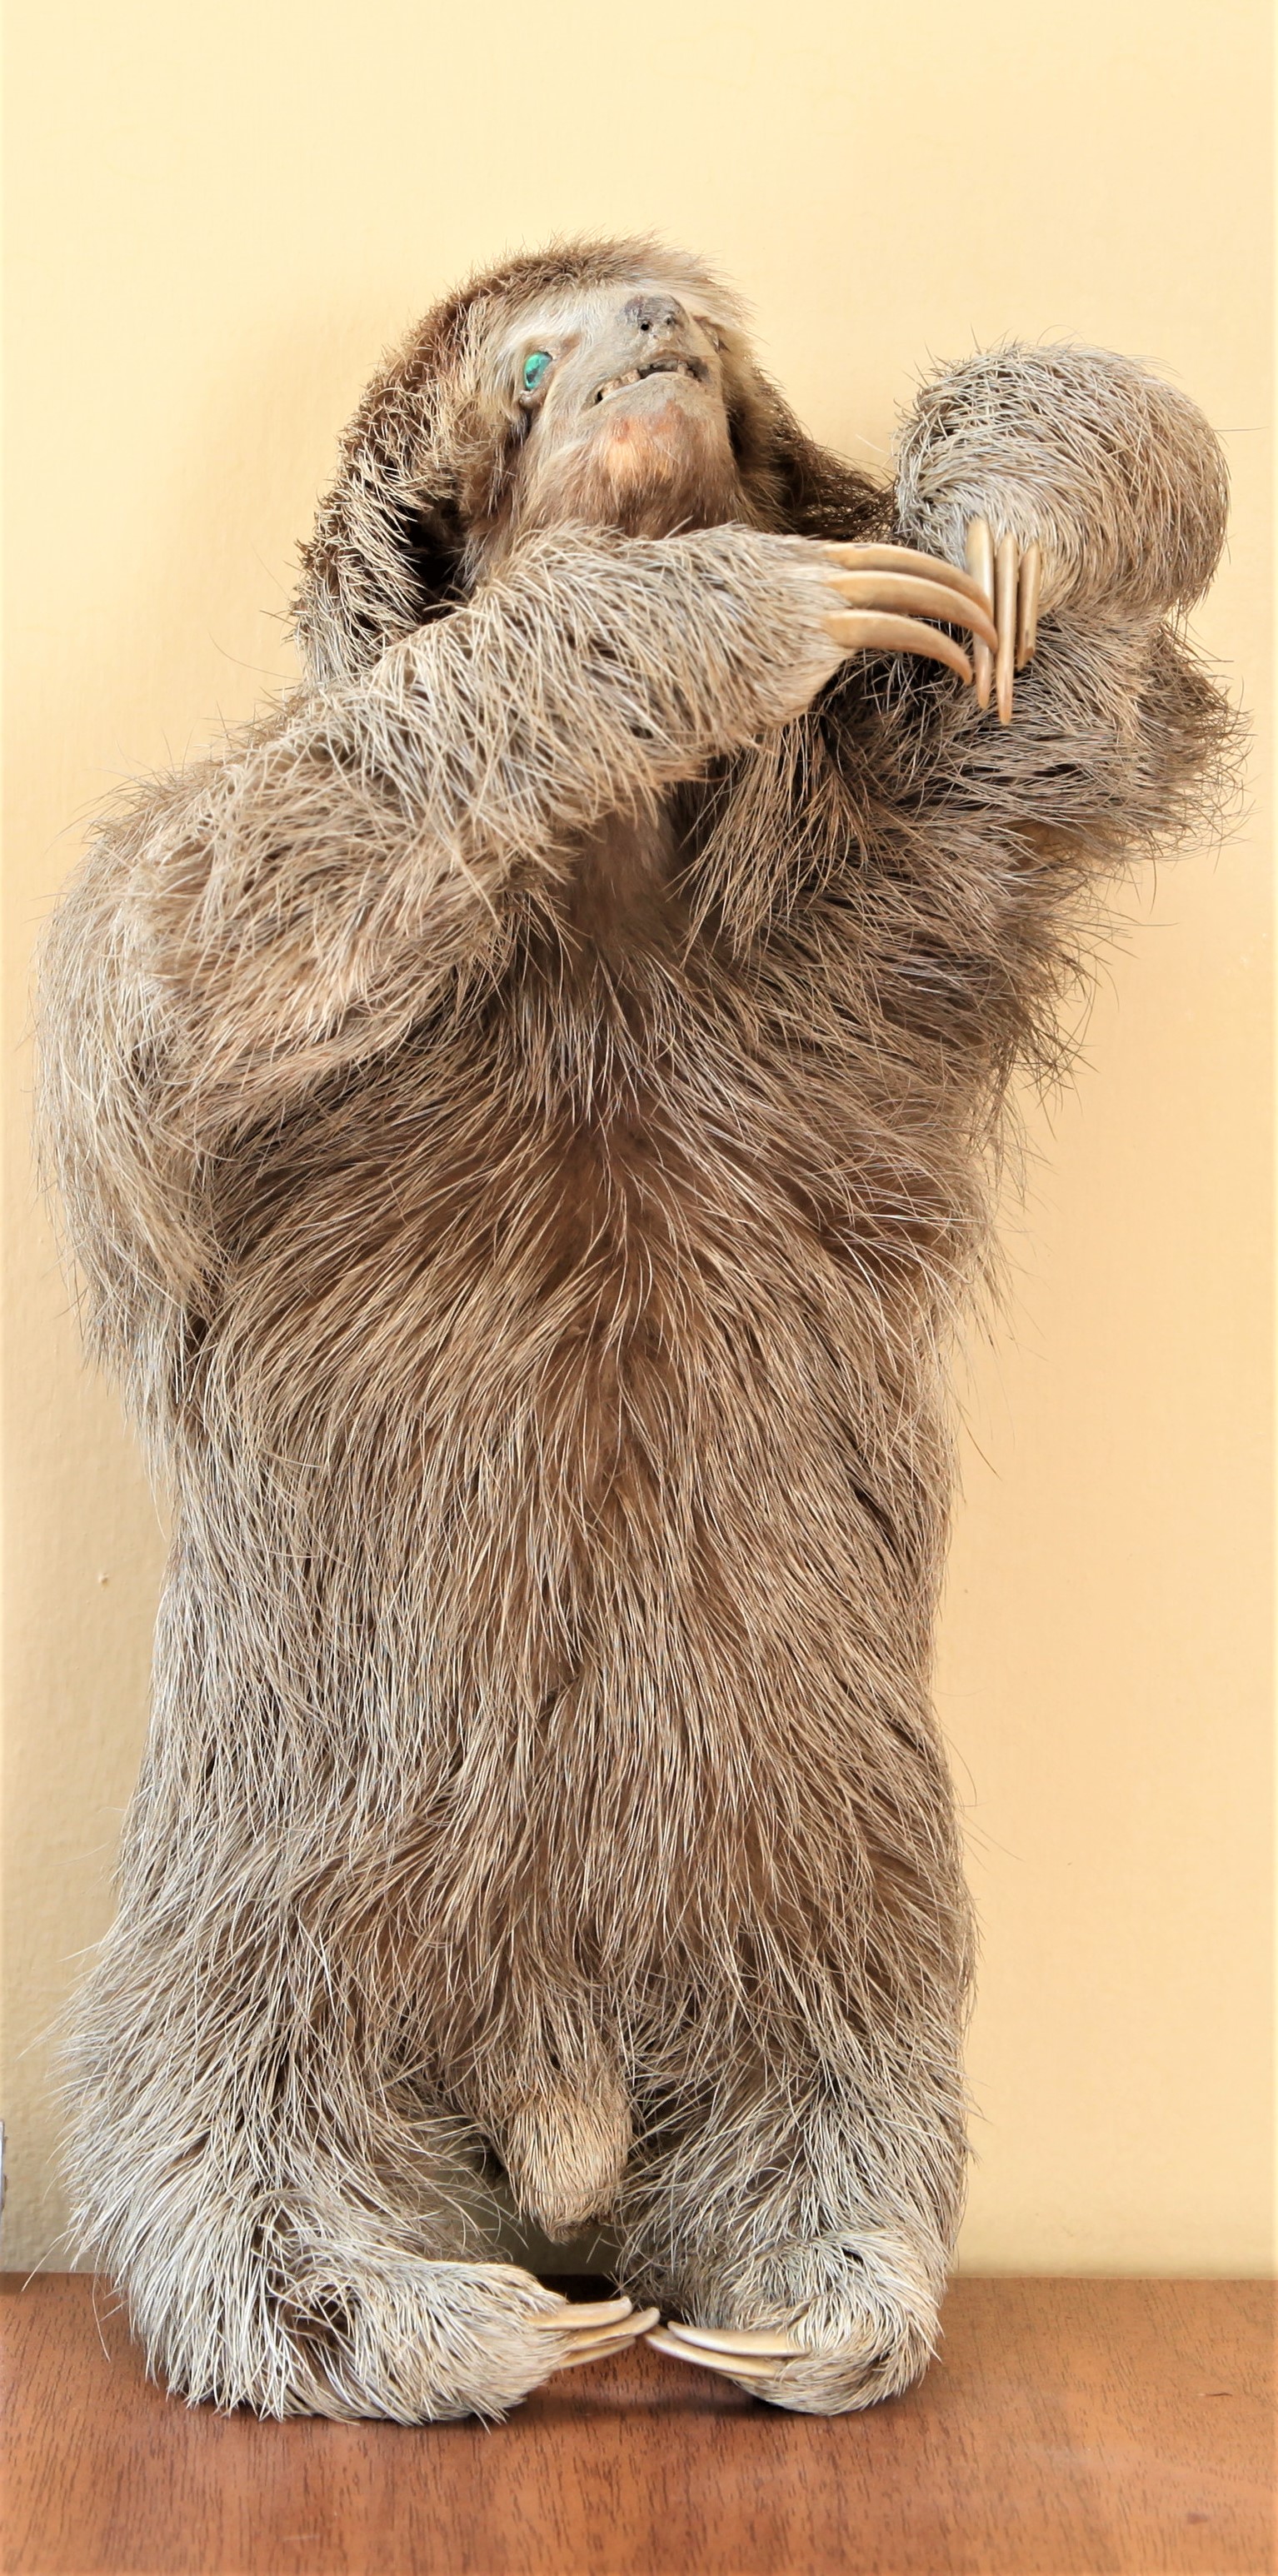 حیوان تنبل  (sloth)